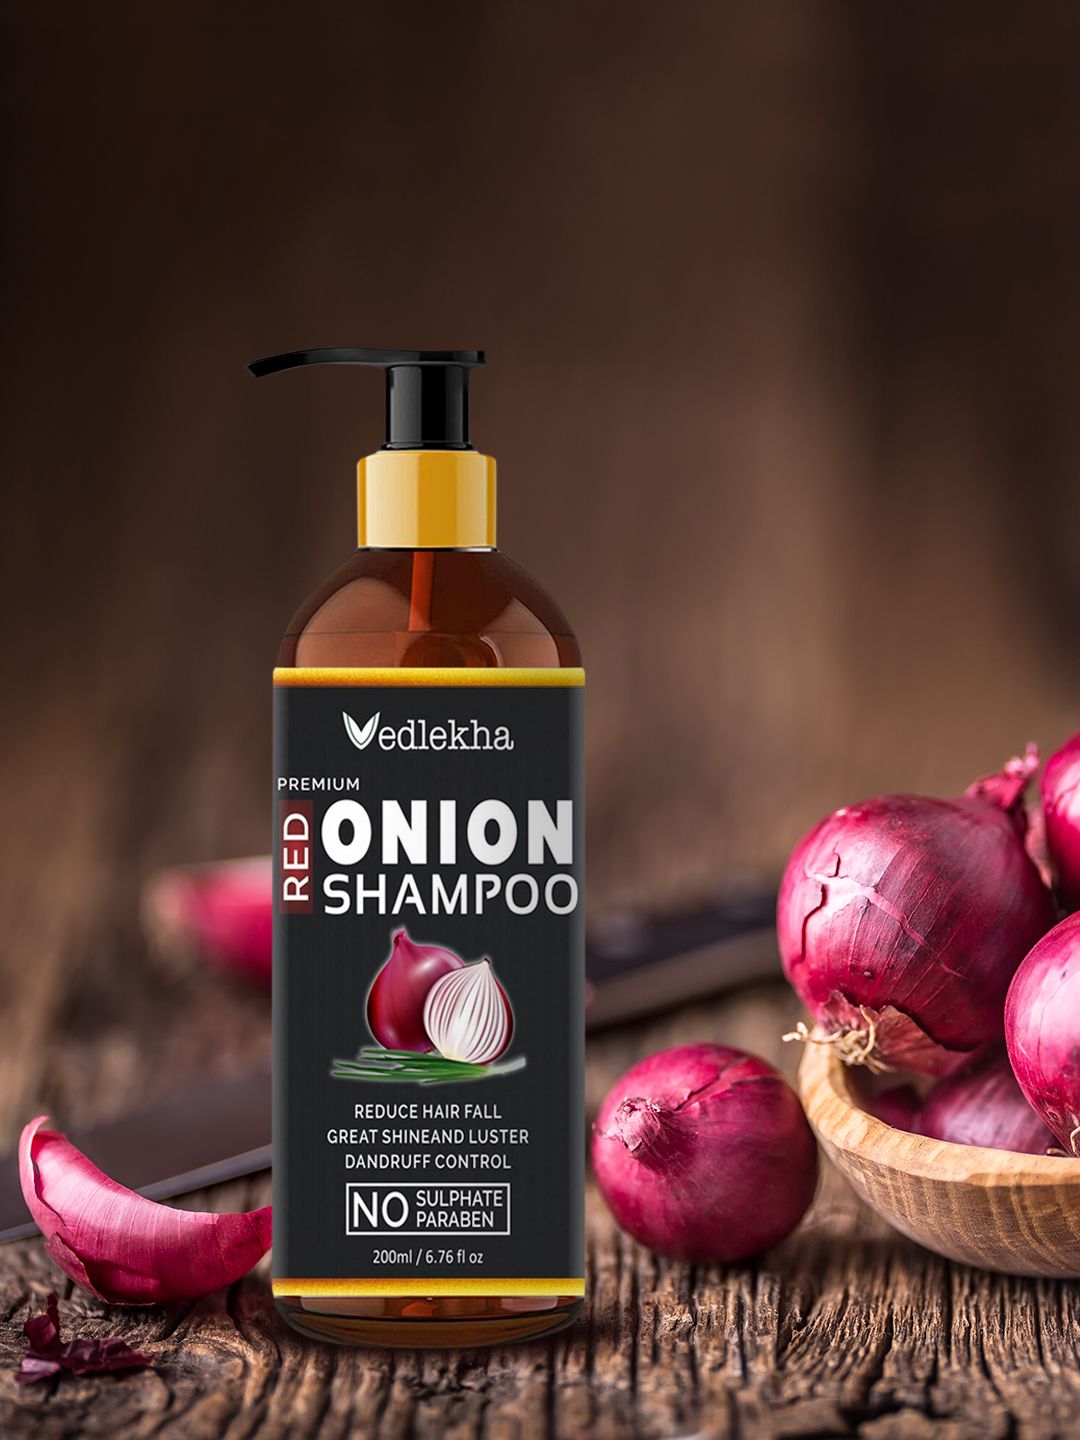 Vedlekha Onion Hair Shampoo 200ml Price in India